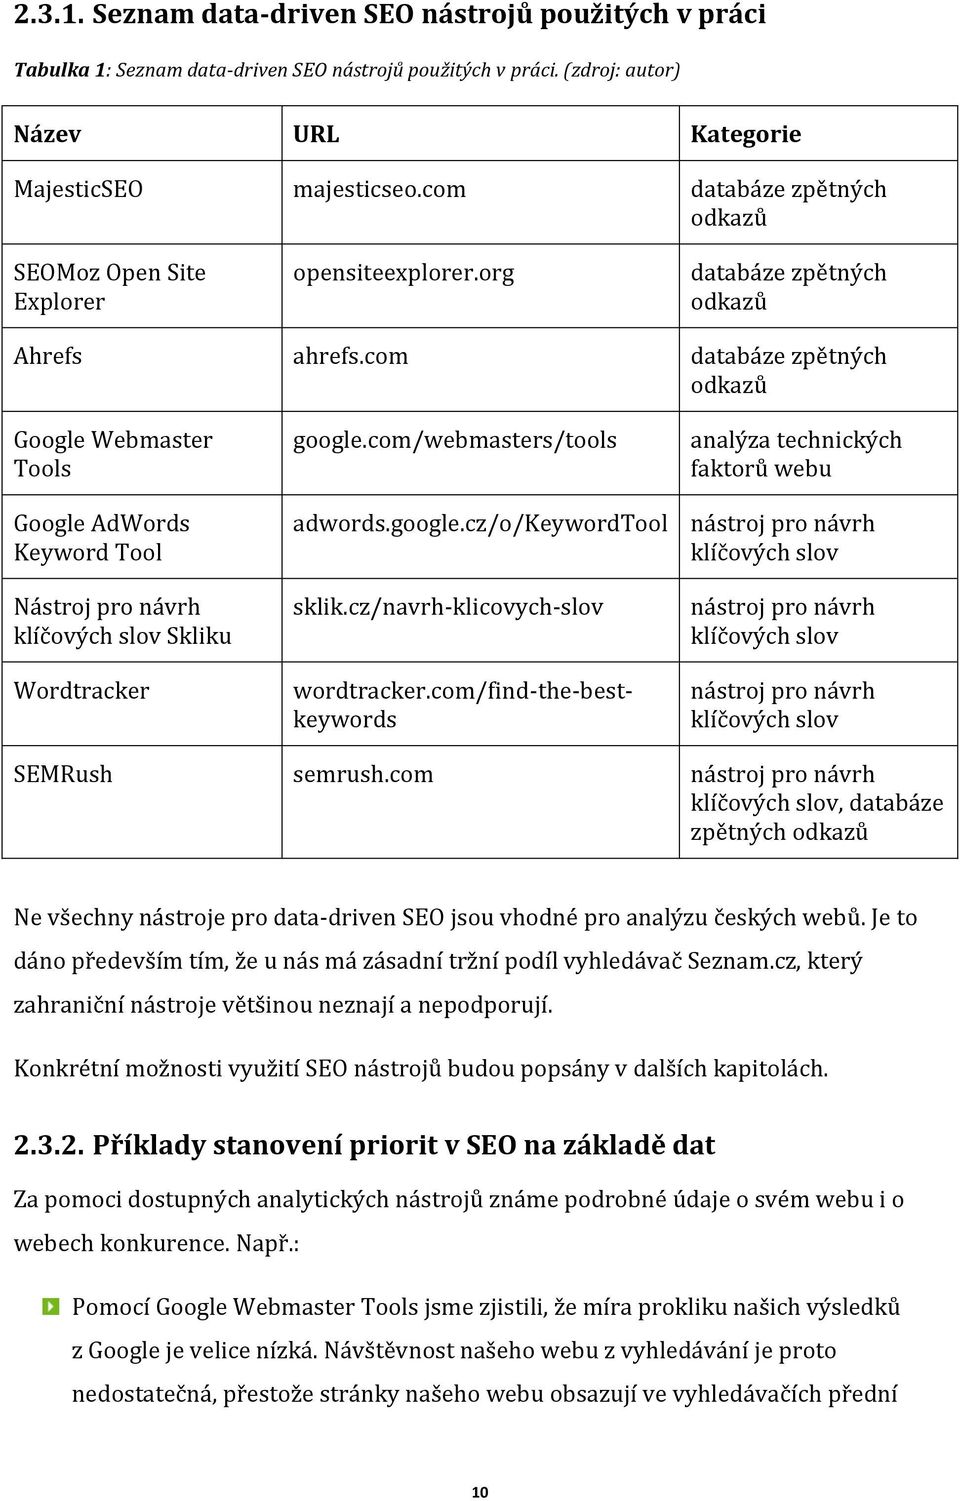 com databáze zpětných odkazů Google Webmaster Tools Google AdWords Keyword Tool Nástroj pro návrh klíčových slov Skliku Wordtracker google.com/webmasters/tools adwords.google.cz/o/keywordtool sklik.